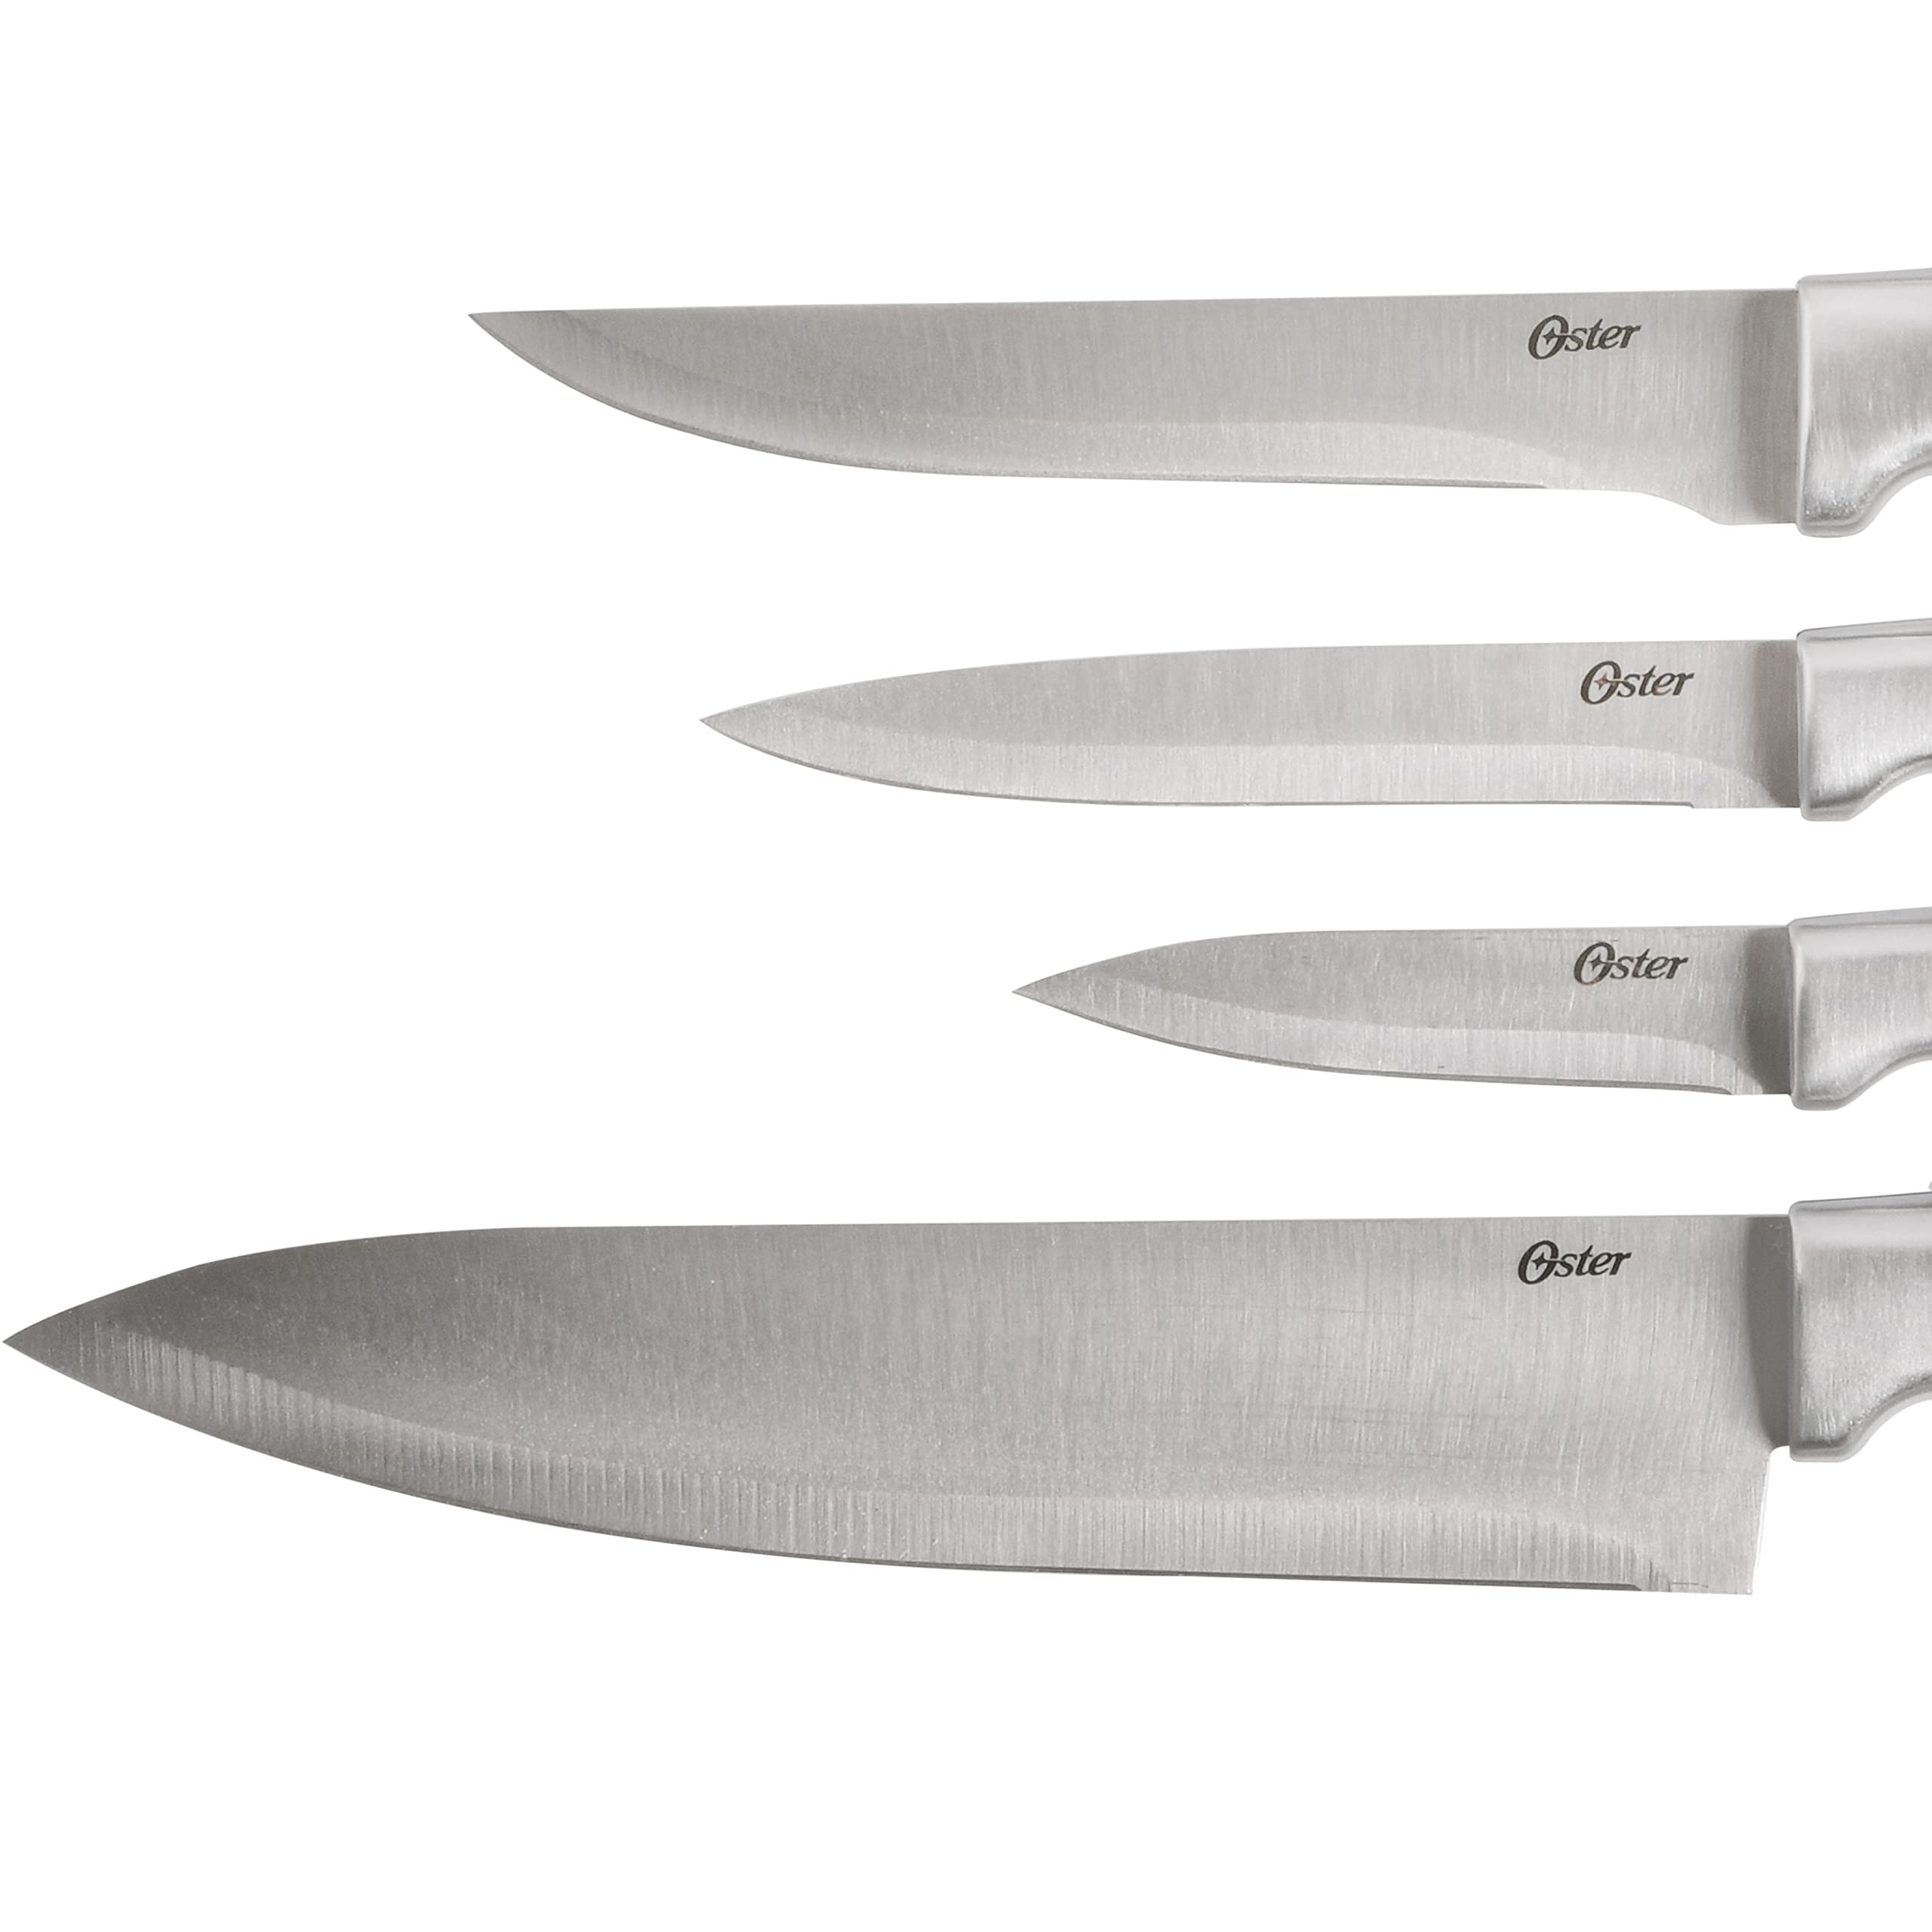 Oster Baldwyn High-Carbon Stainless Steel Kitchen Knife Cutlery Block Set, 22-Piece, Brushed Satin